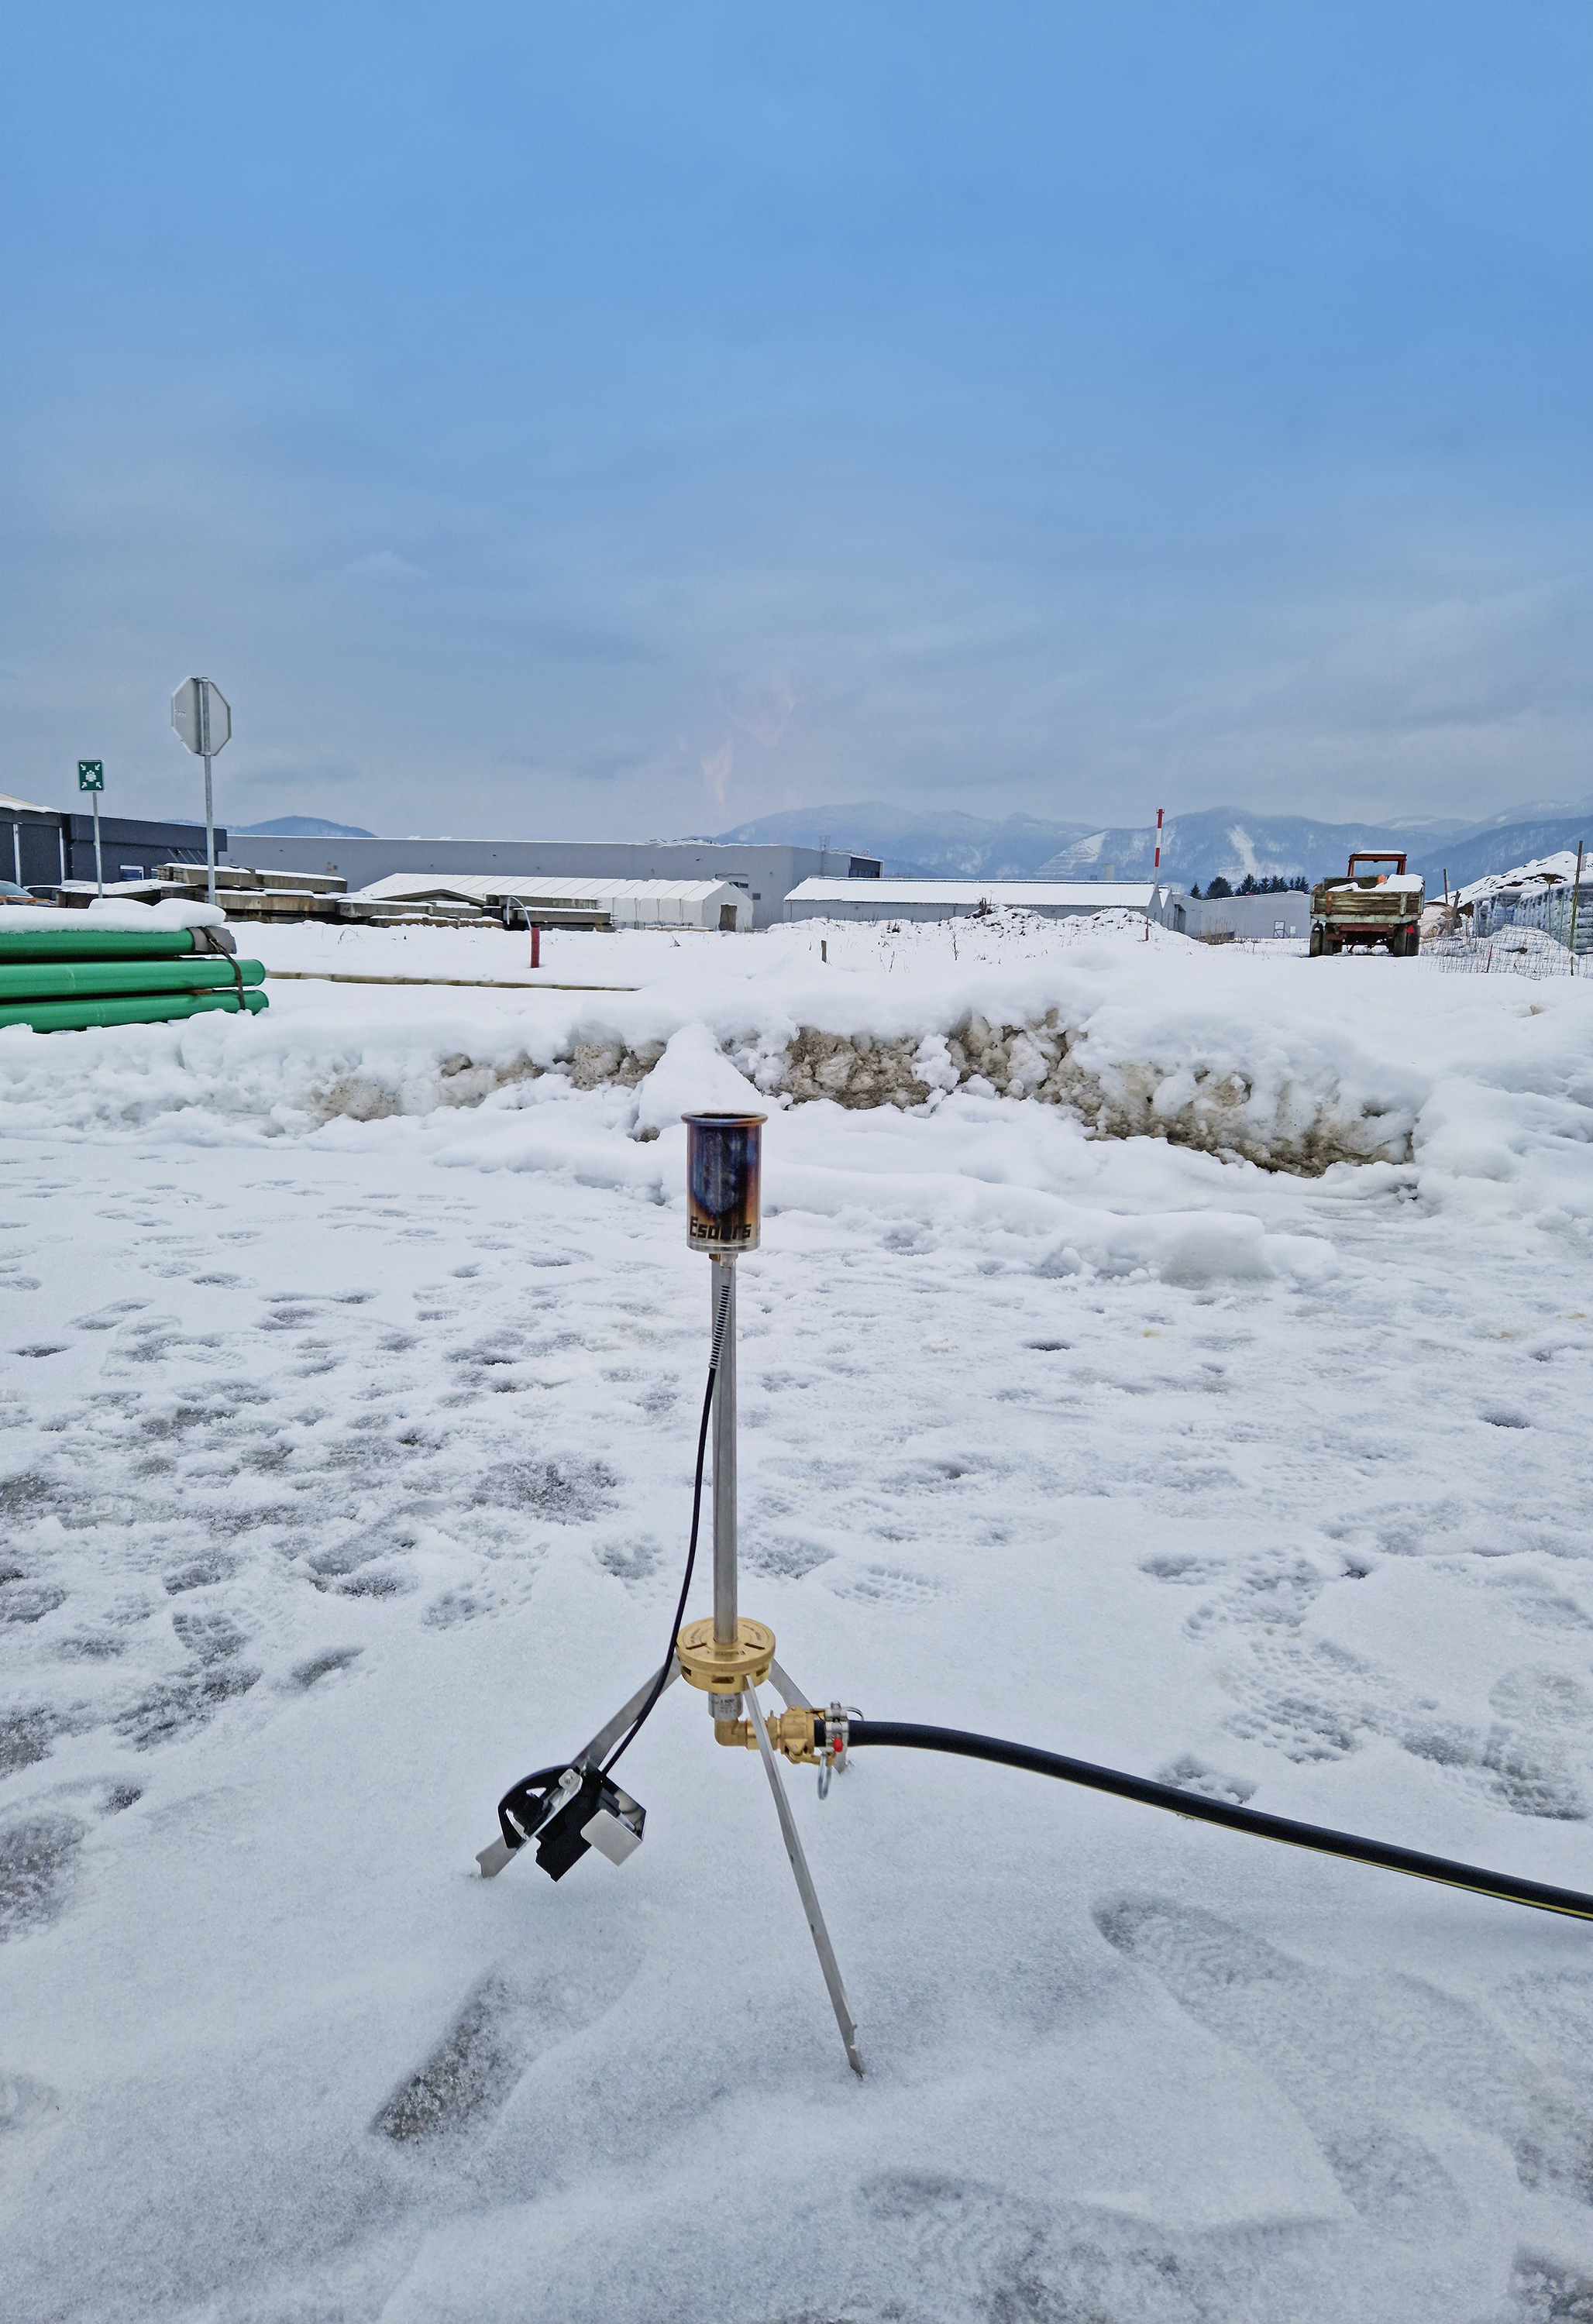 Mobile Gas Flare S in use in Slovenia